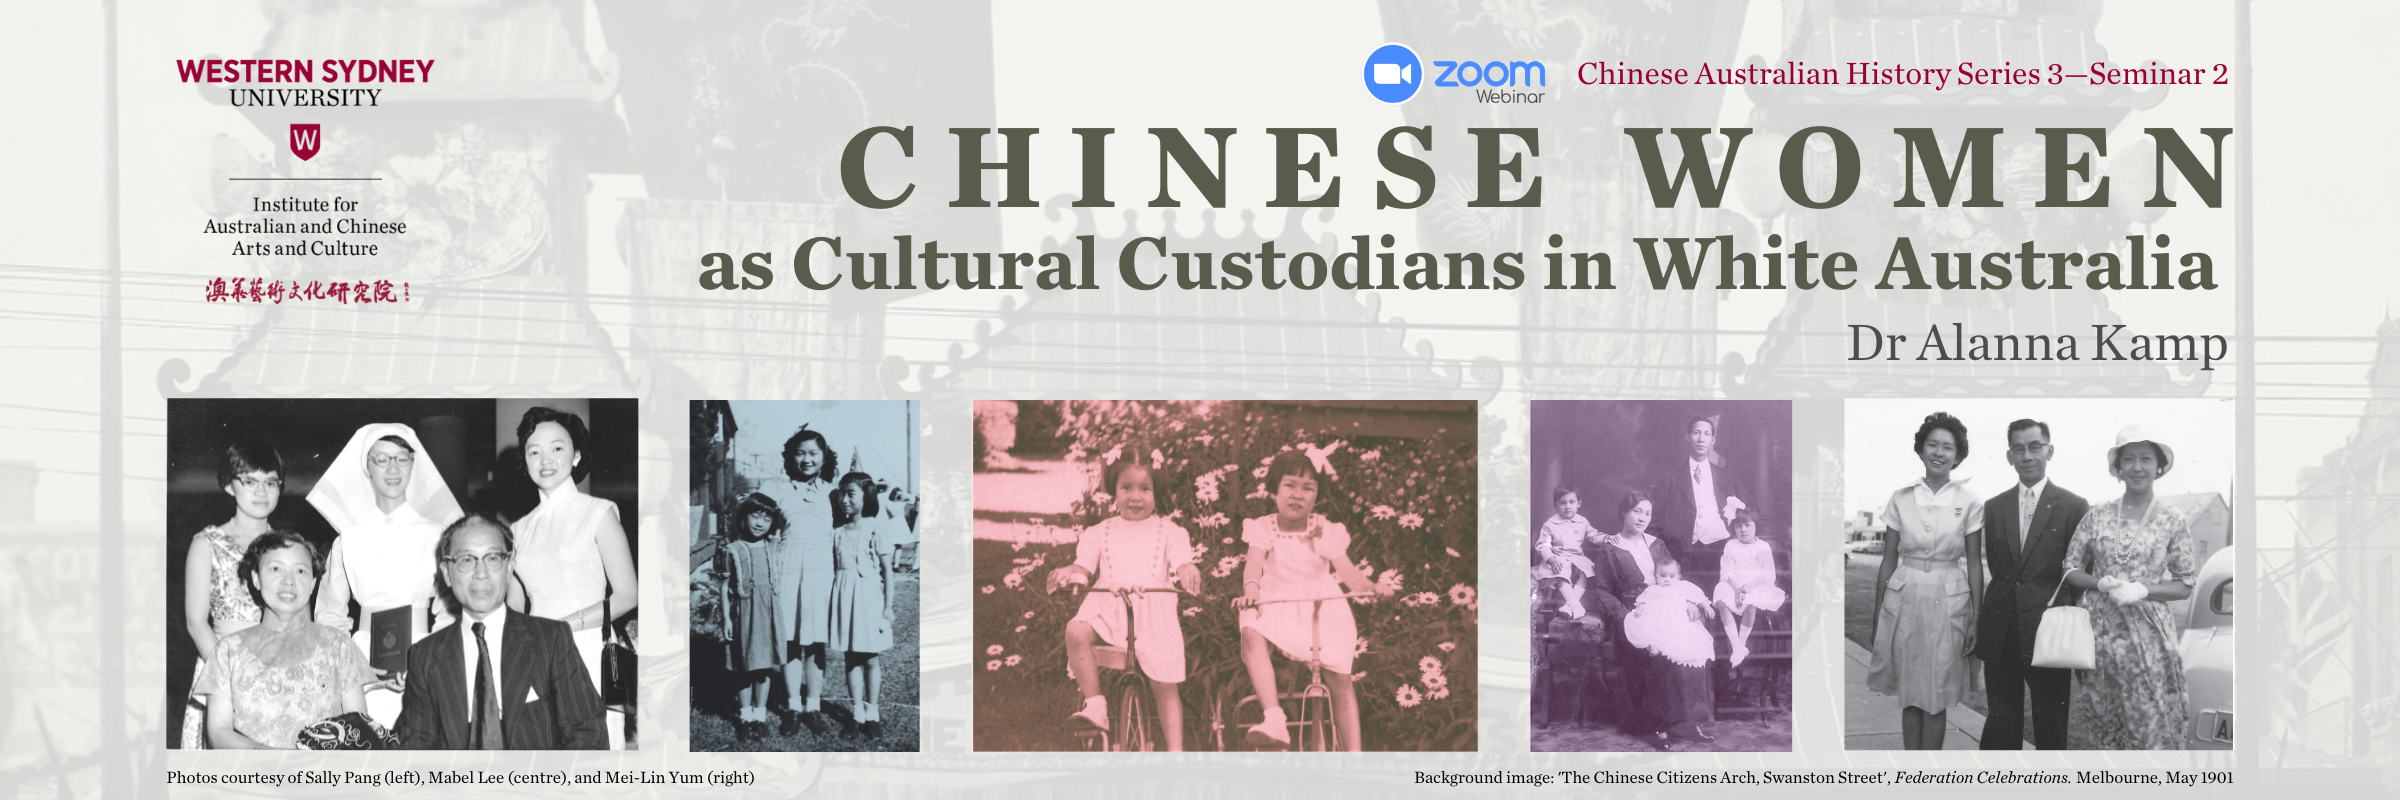 Chinese Australian Women as Cultural Custodians 2